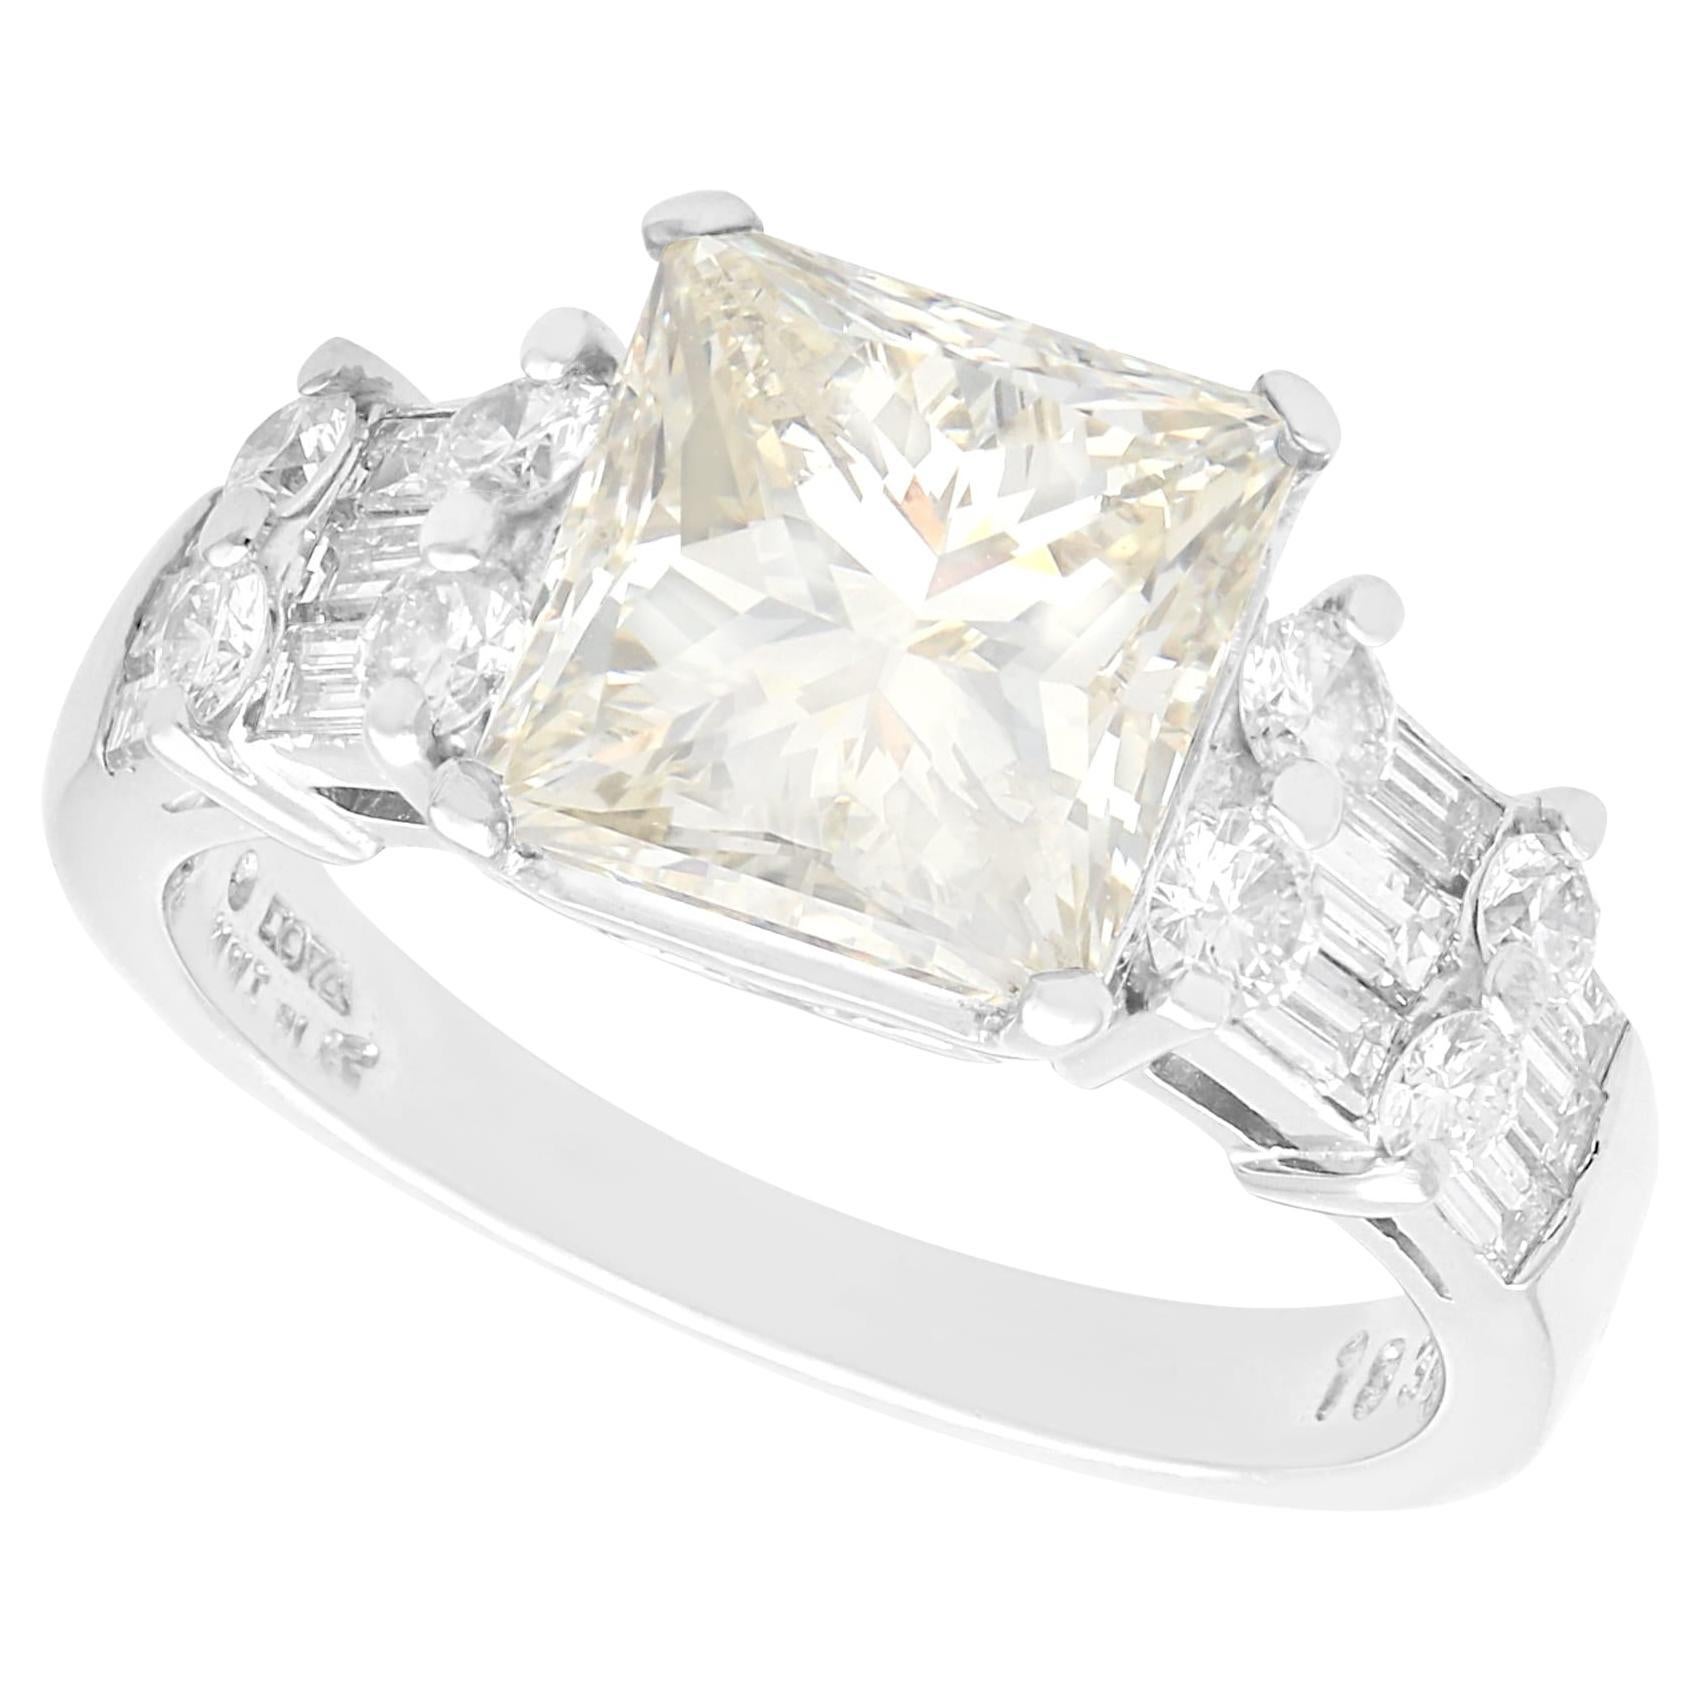 Vintage 5.12 Carat Diamond and Platinum Solitaire Ring